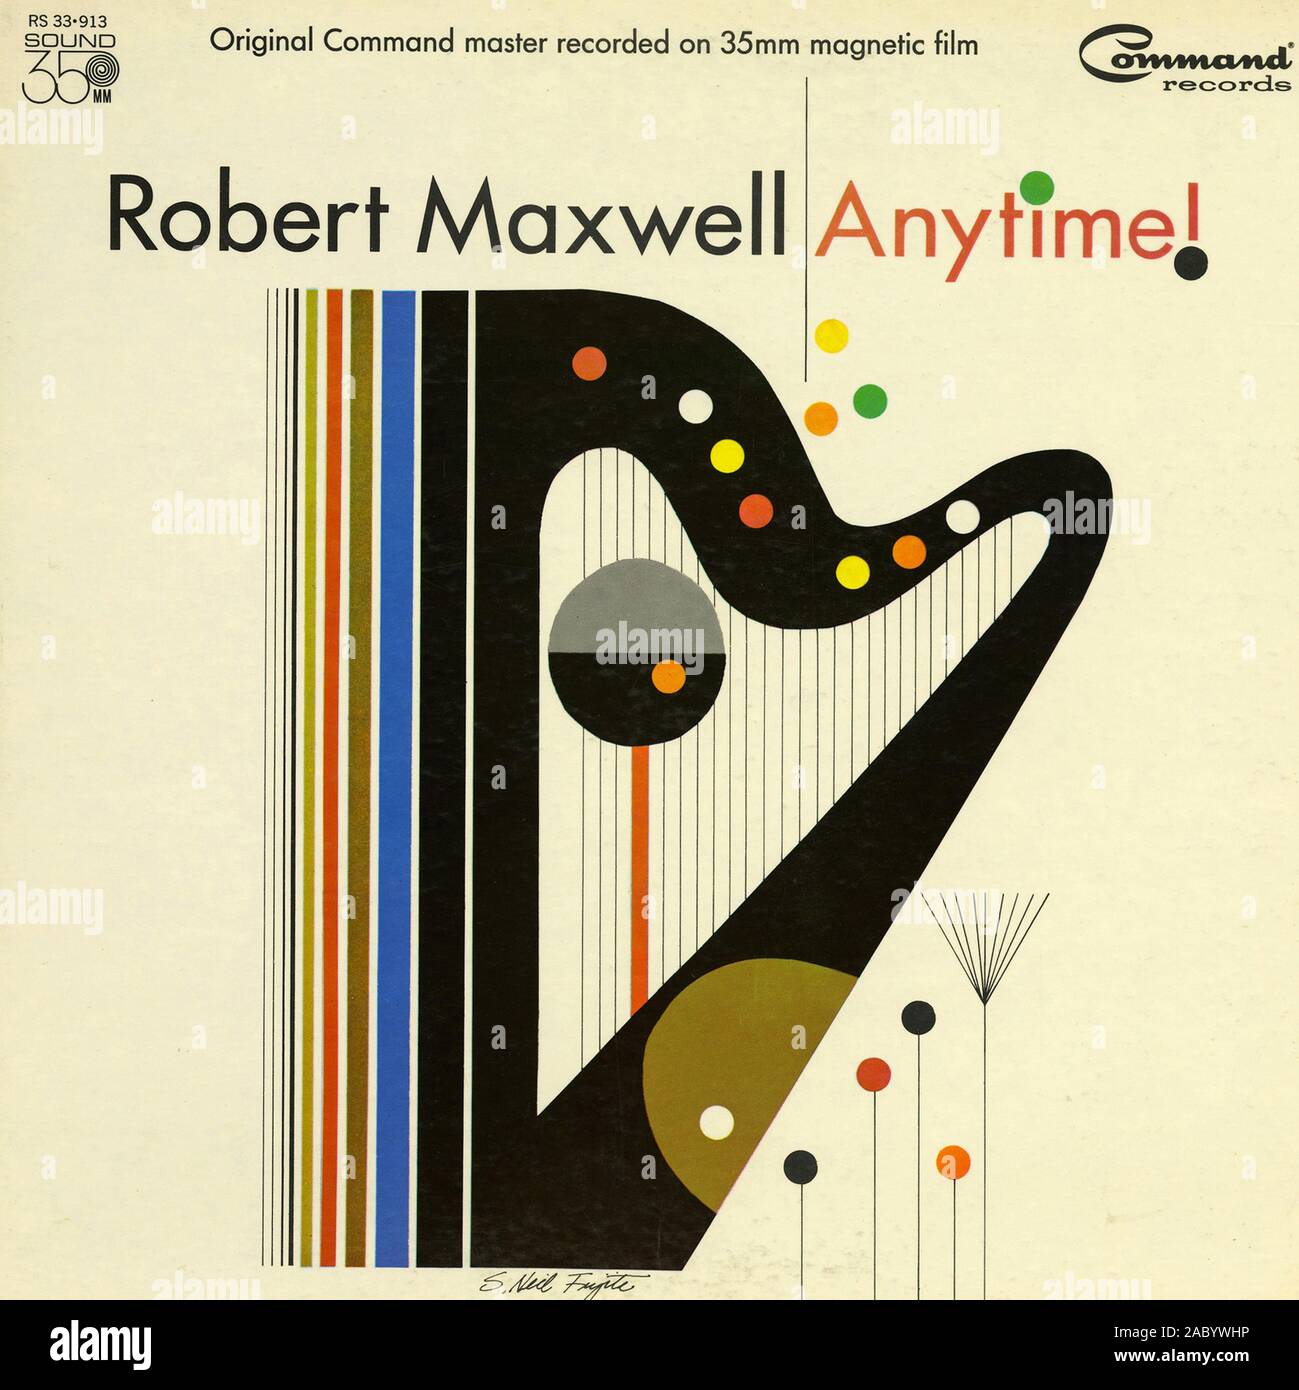 Anytime! Robert Maxwell - Vintage vinyl album cover Stock Photo